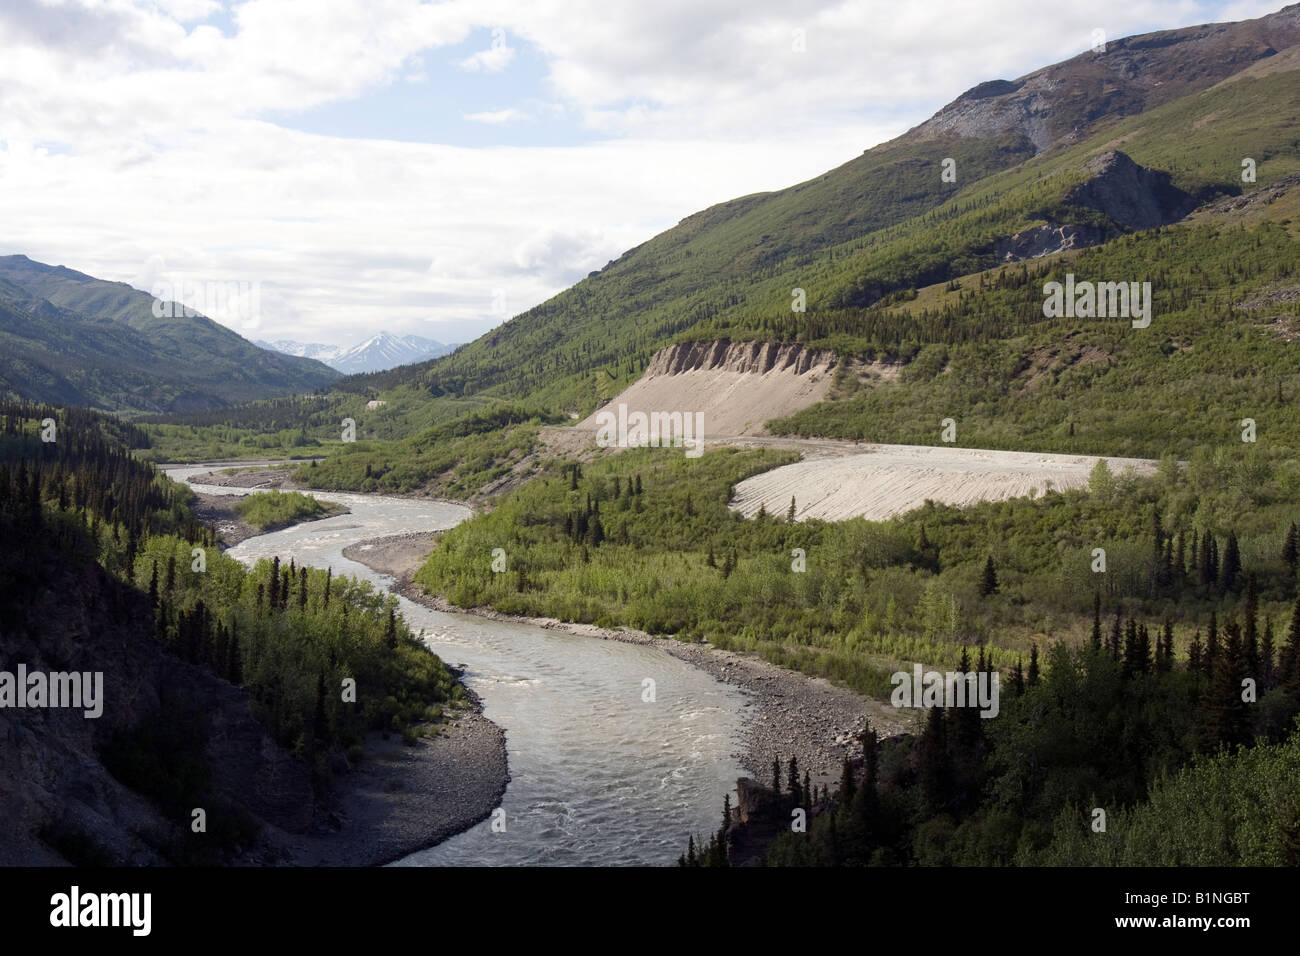 River running through beautiful Alaskan forest valley. Stock Photo